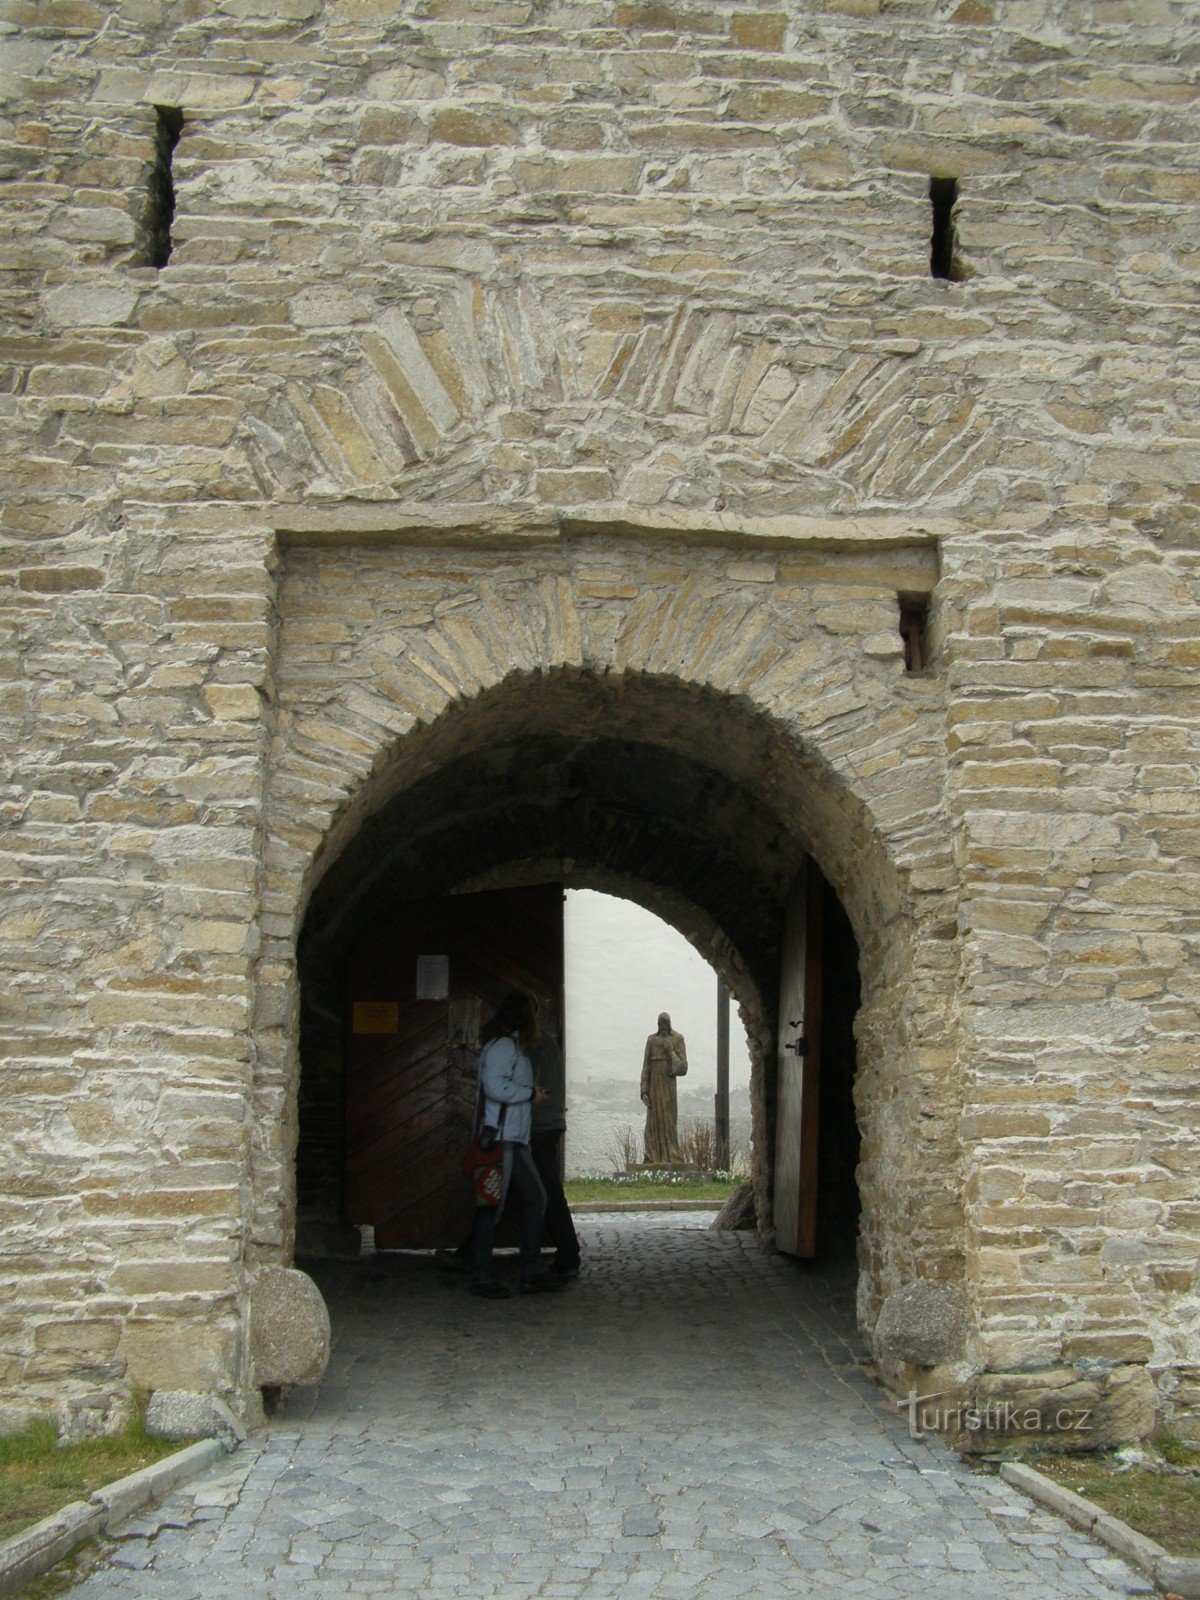 Velká Bíteš - una città con una chiesa fortezza